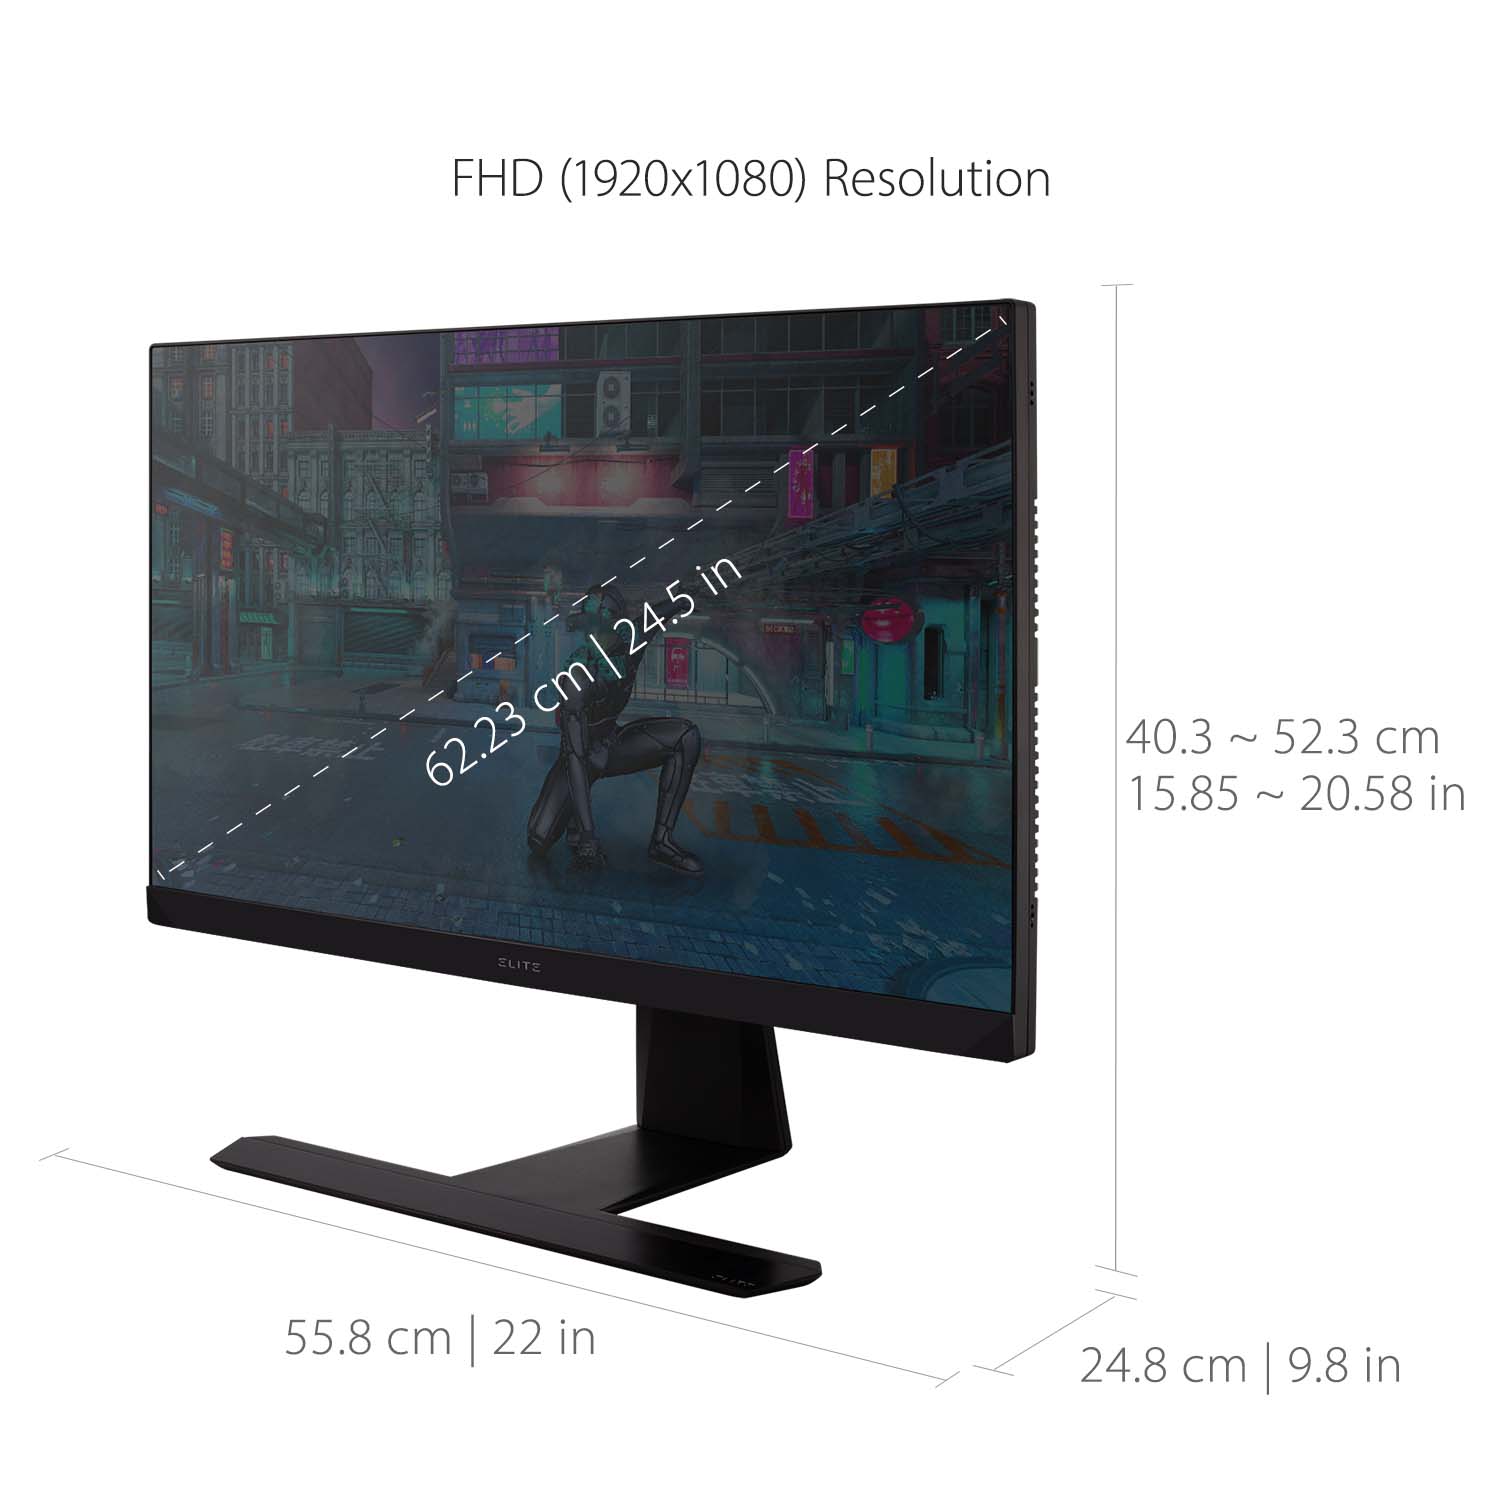 ViewSonic XG251G 25” 360Hz G-Sync Gaming Monitor - ViewSonic Global